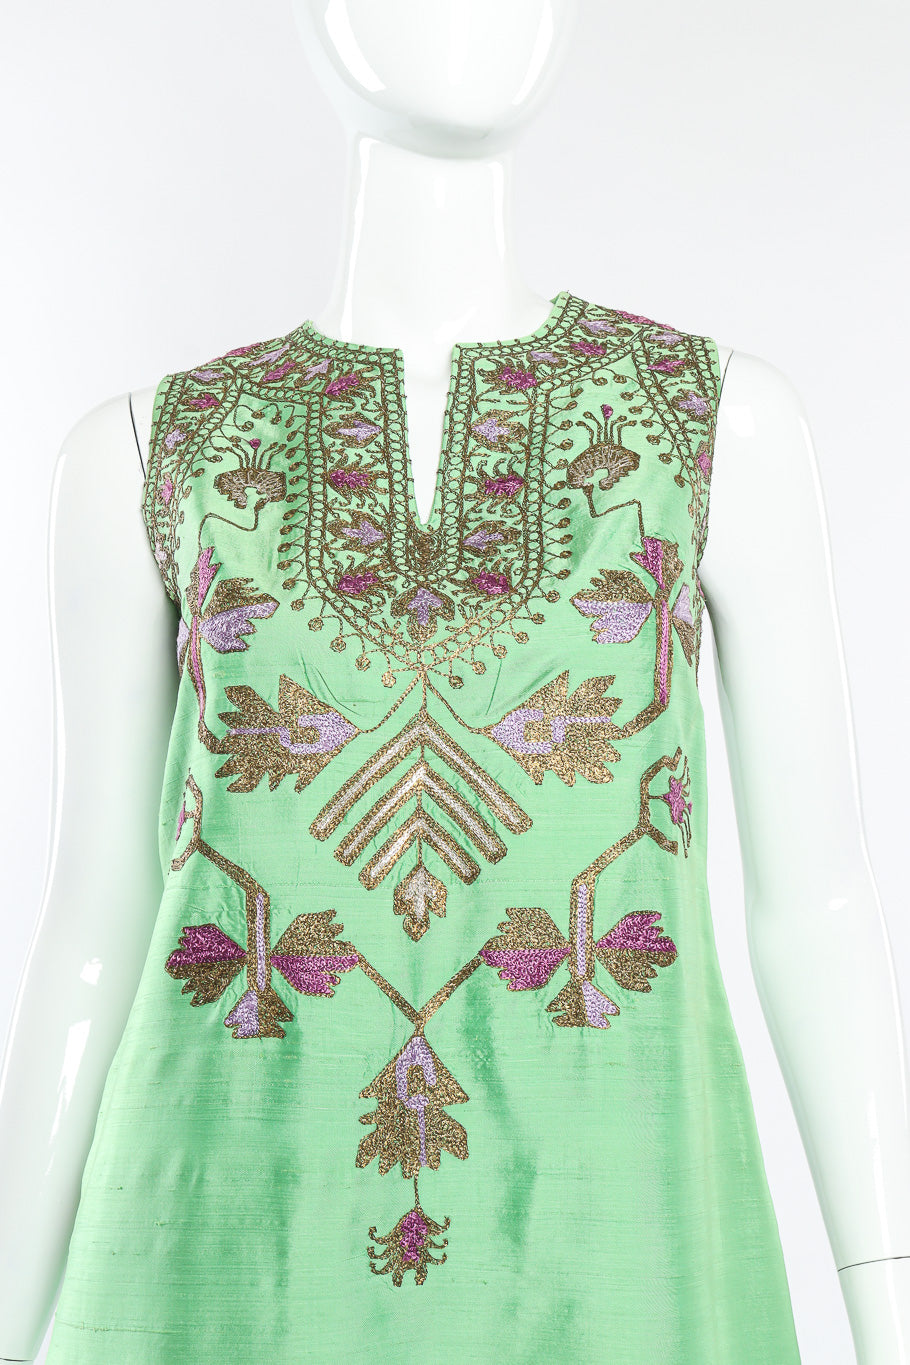 Vintage Artisans Brocade Embellished Tunic Dress front view closeup on mannequin @Recessla